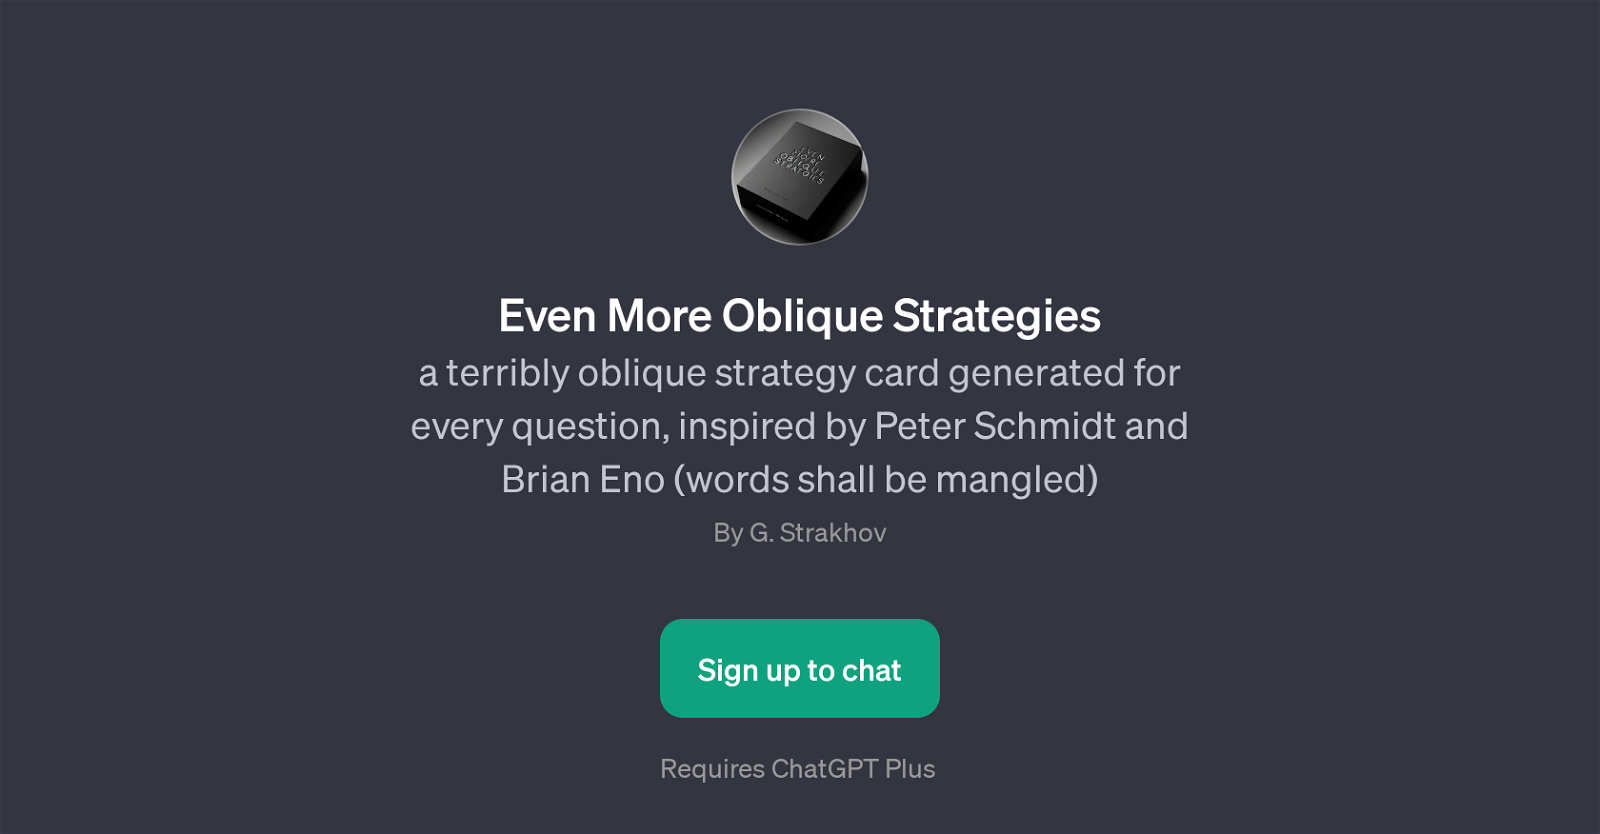 Even More Oblique Strategies website